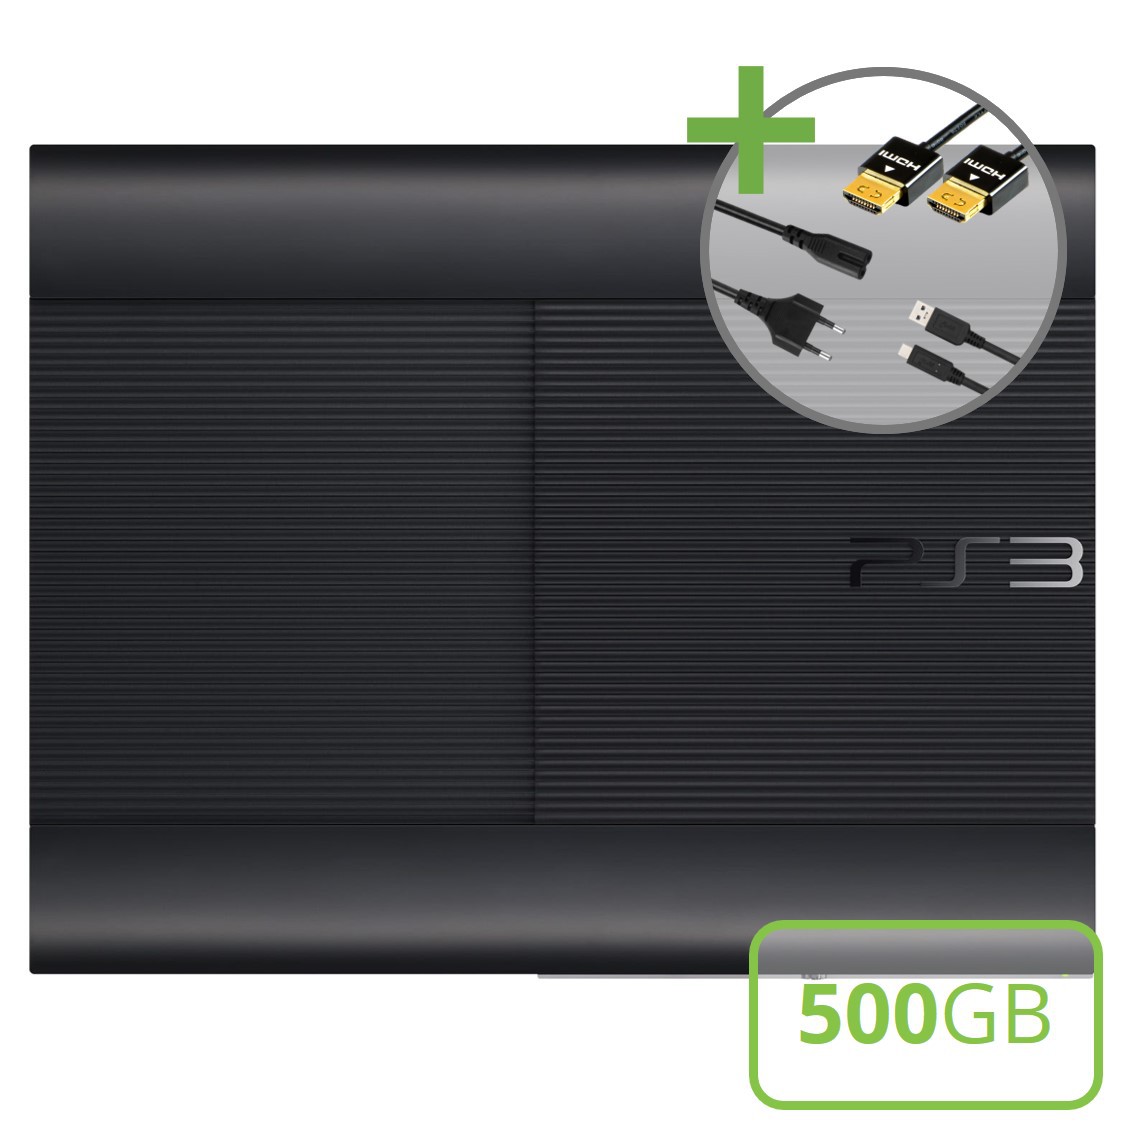 Sony PlayStation 3 Super Slim (500GB) Starter Pack - DualShock Edition - Playstation 3 Hardware - 3